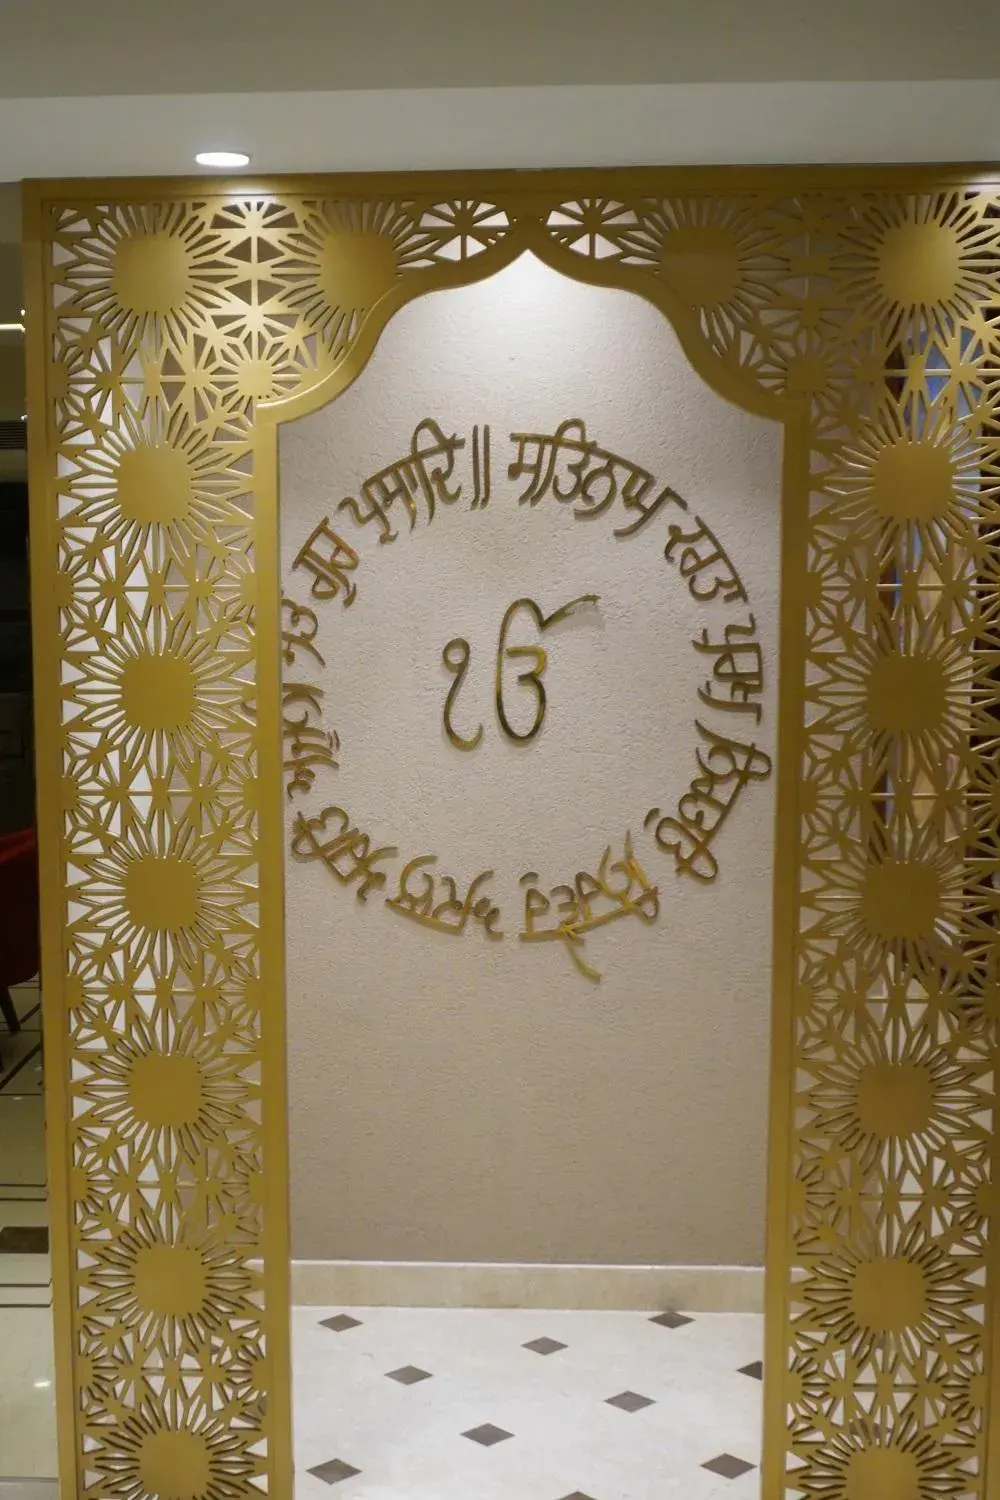 Lobby or reception in Comfort Inn Dhaliwals, Gurgaon